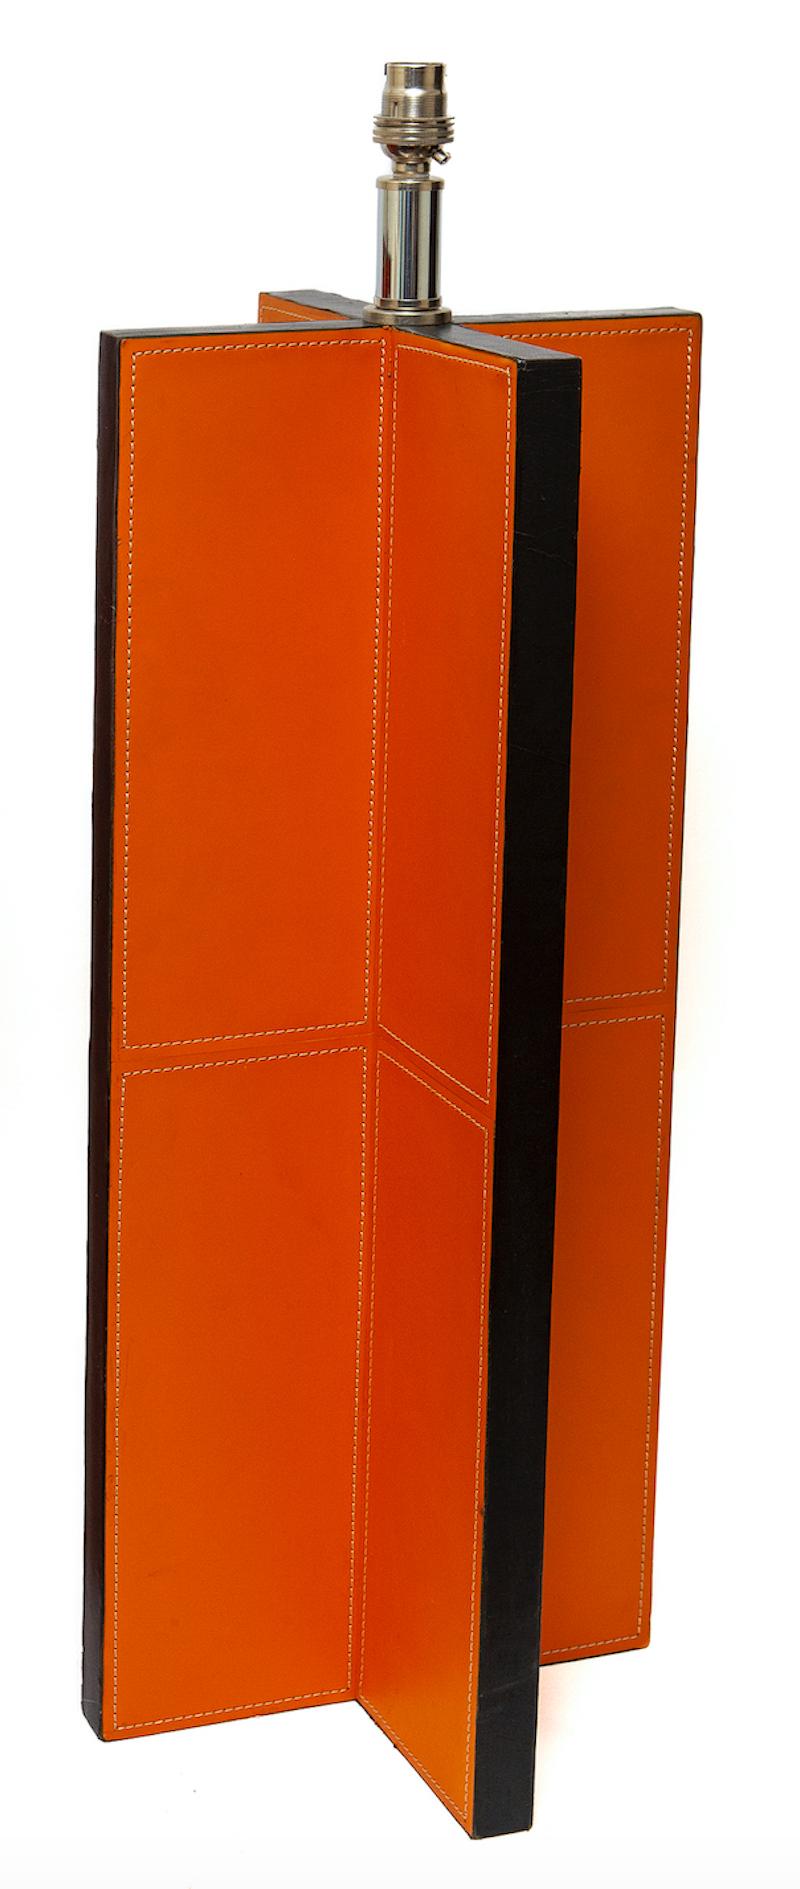 lamps pair vintage leather orange jean michel frank croisillon inspired H28